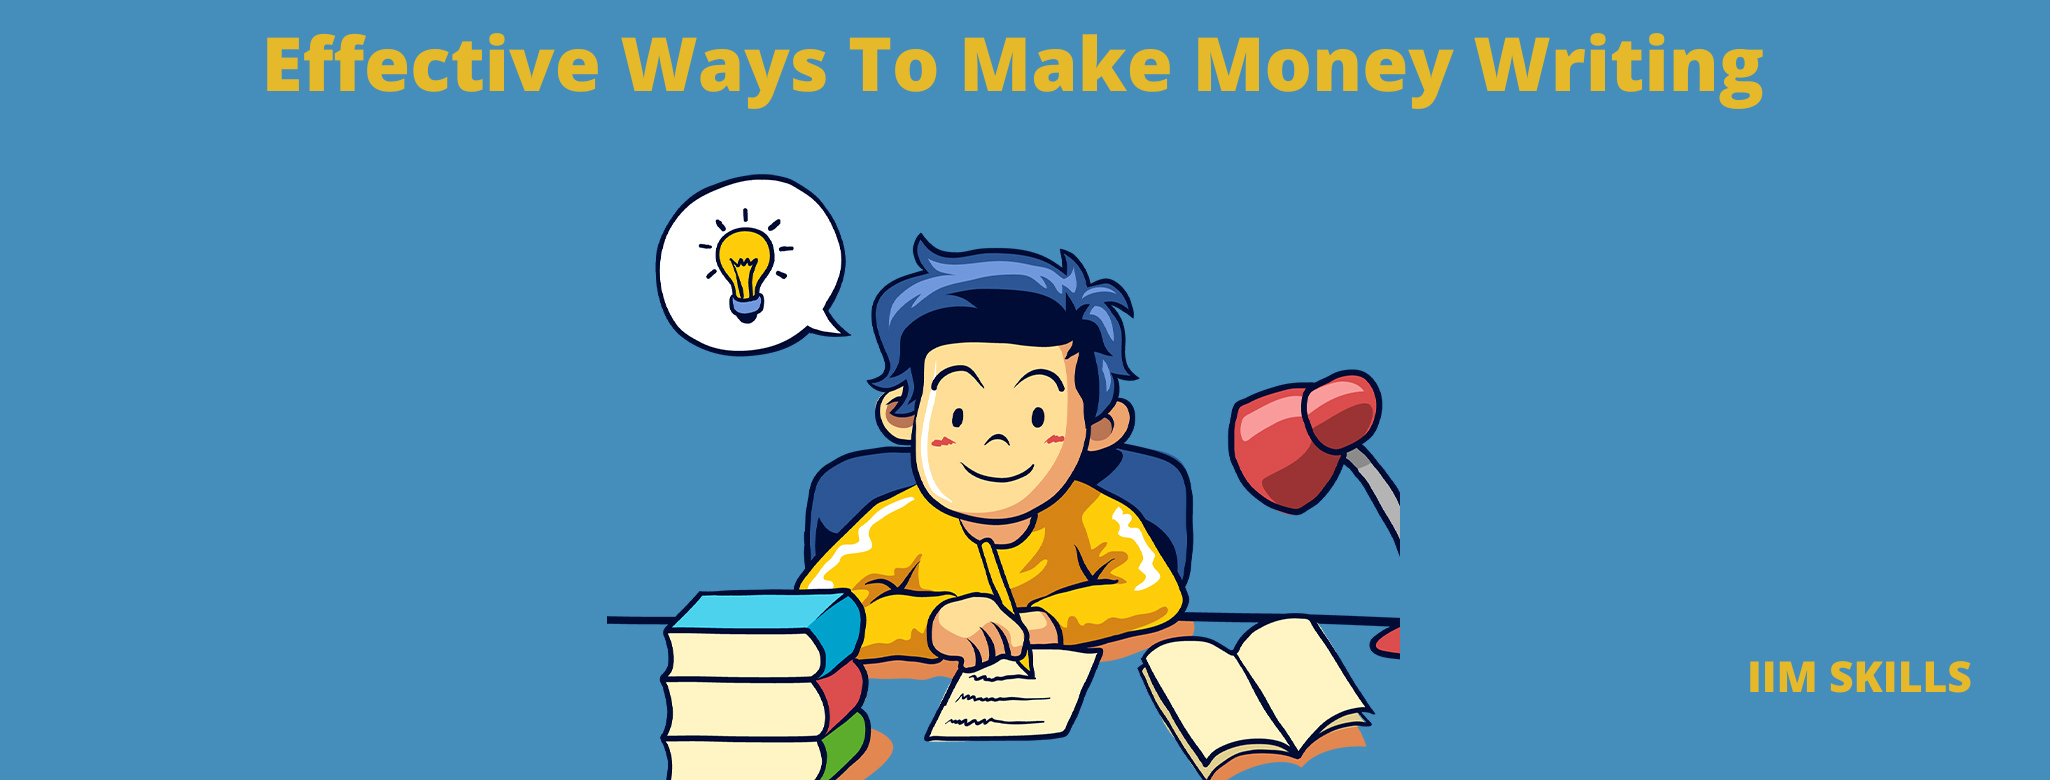 Effective Ways To Make Money Writing